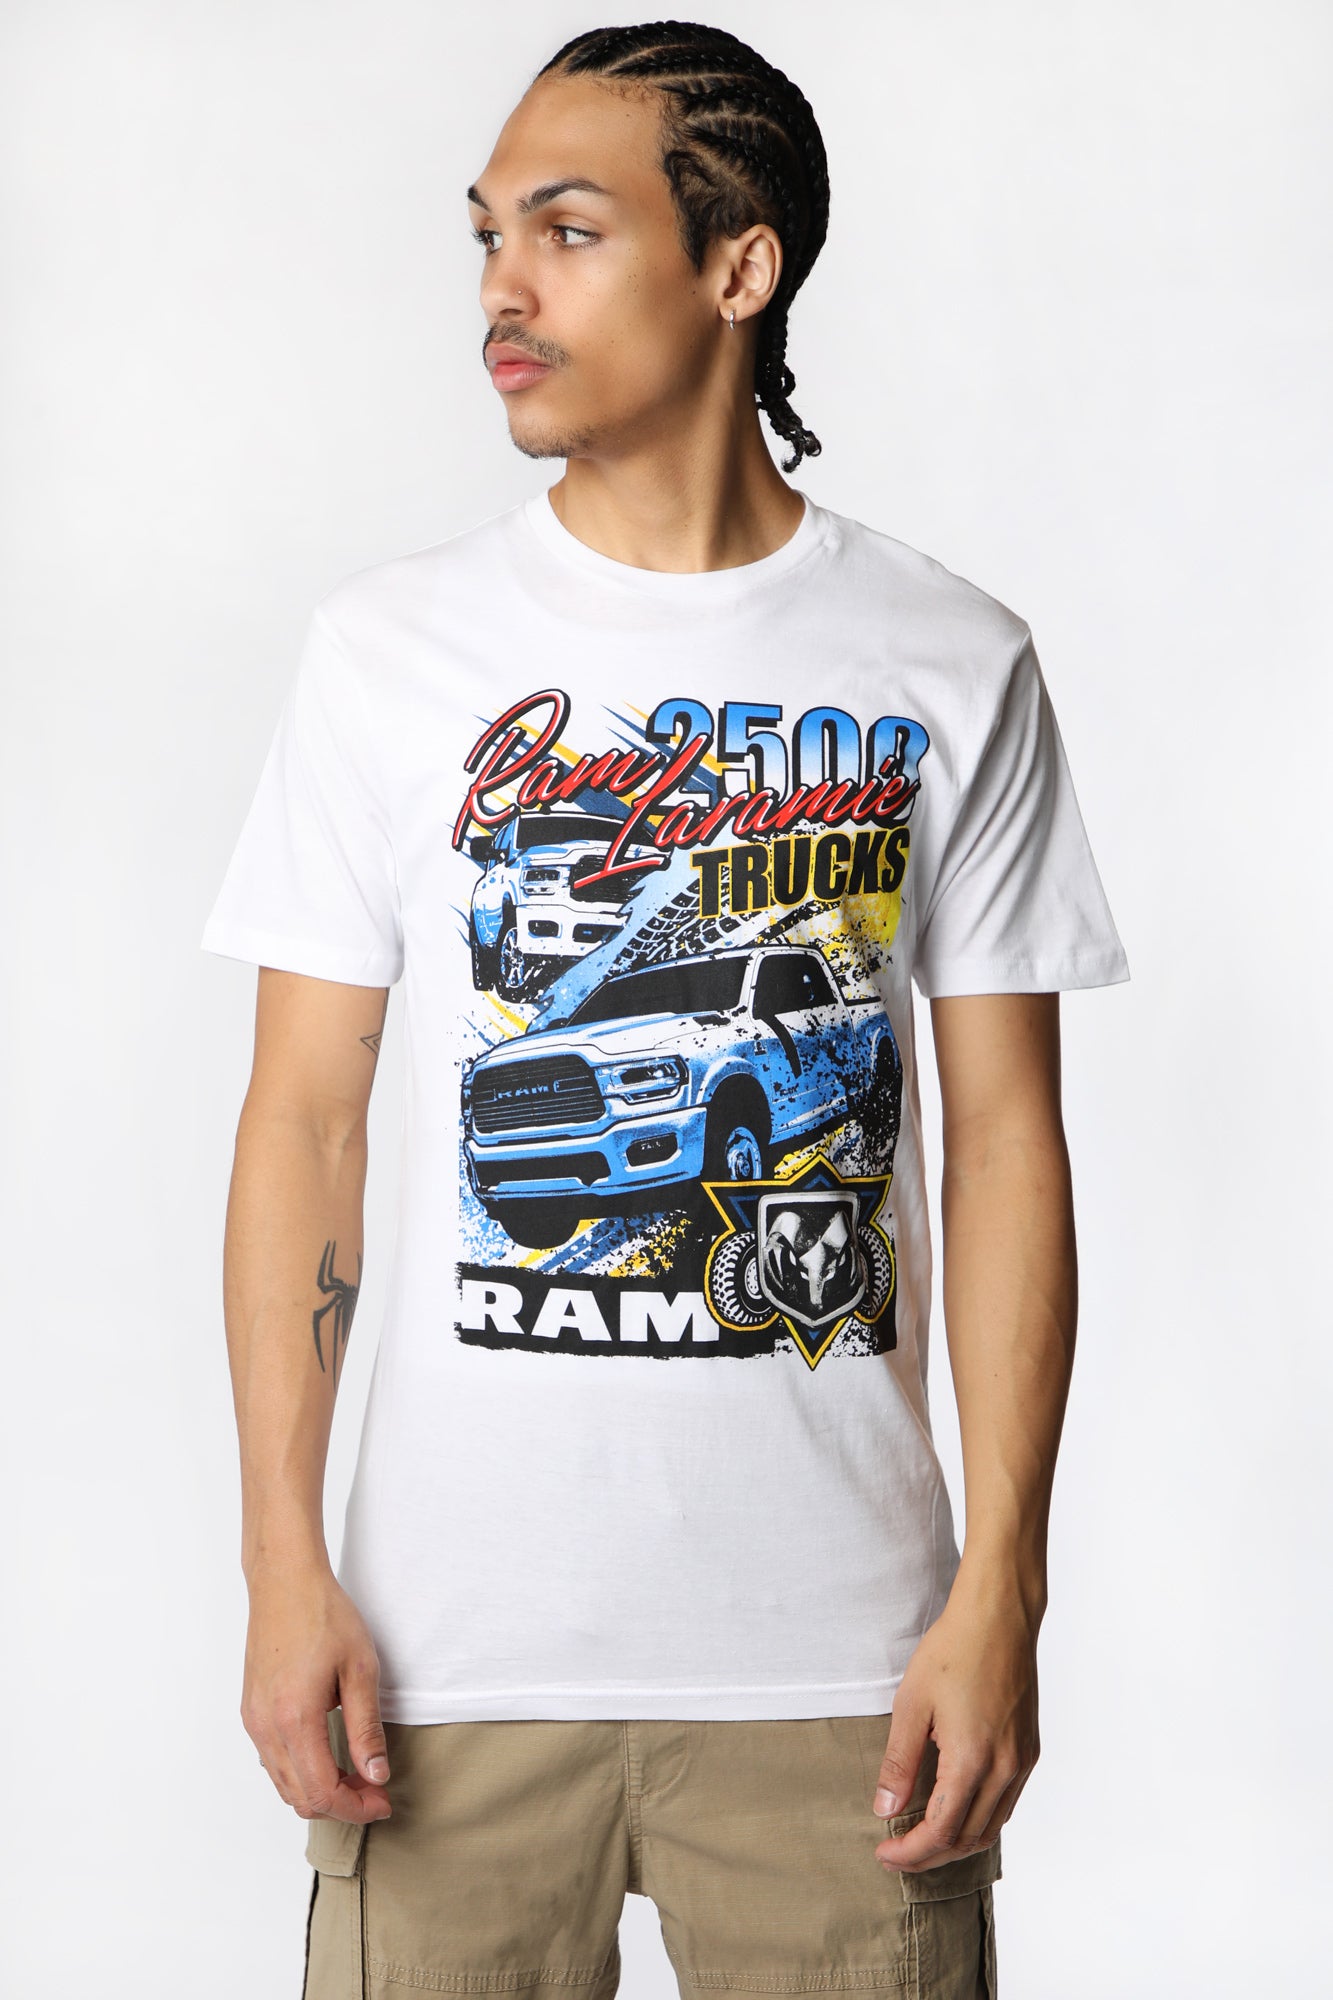 Mens Ram 2500 Laramie Trucks T-Shirt - White /